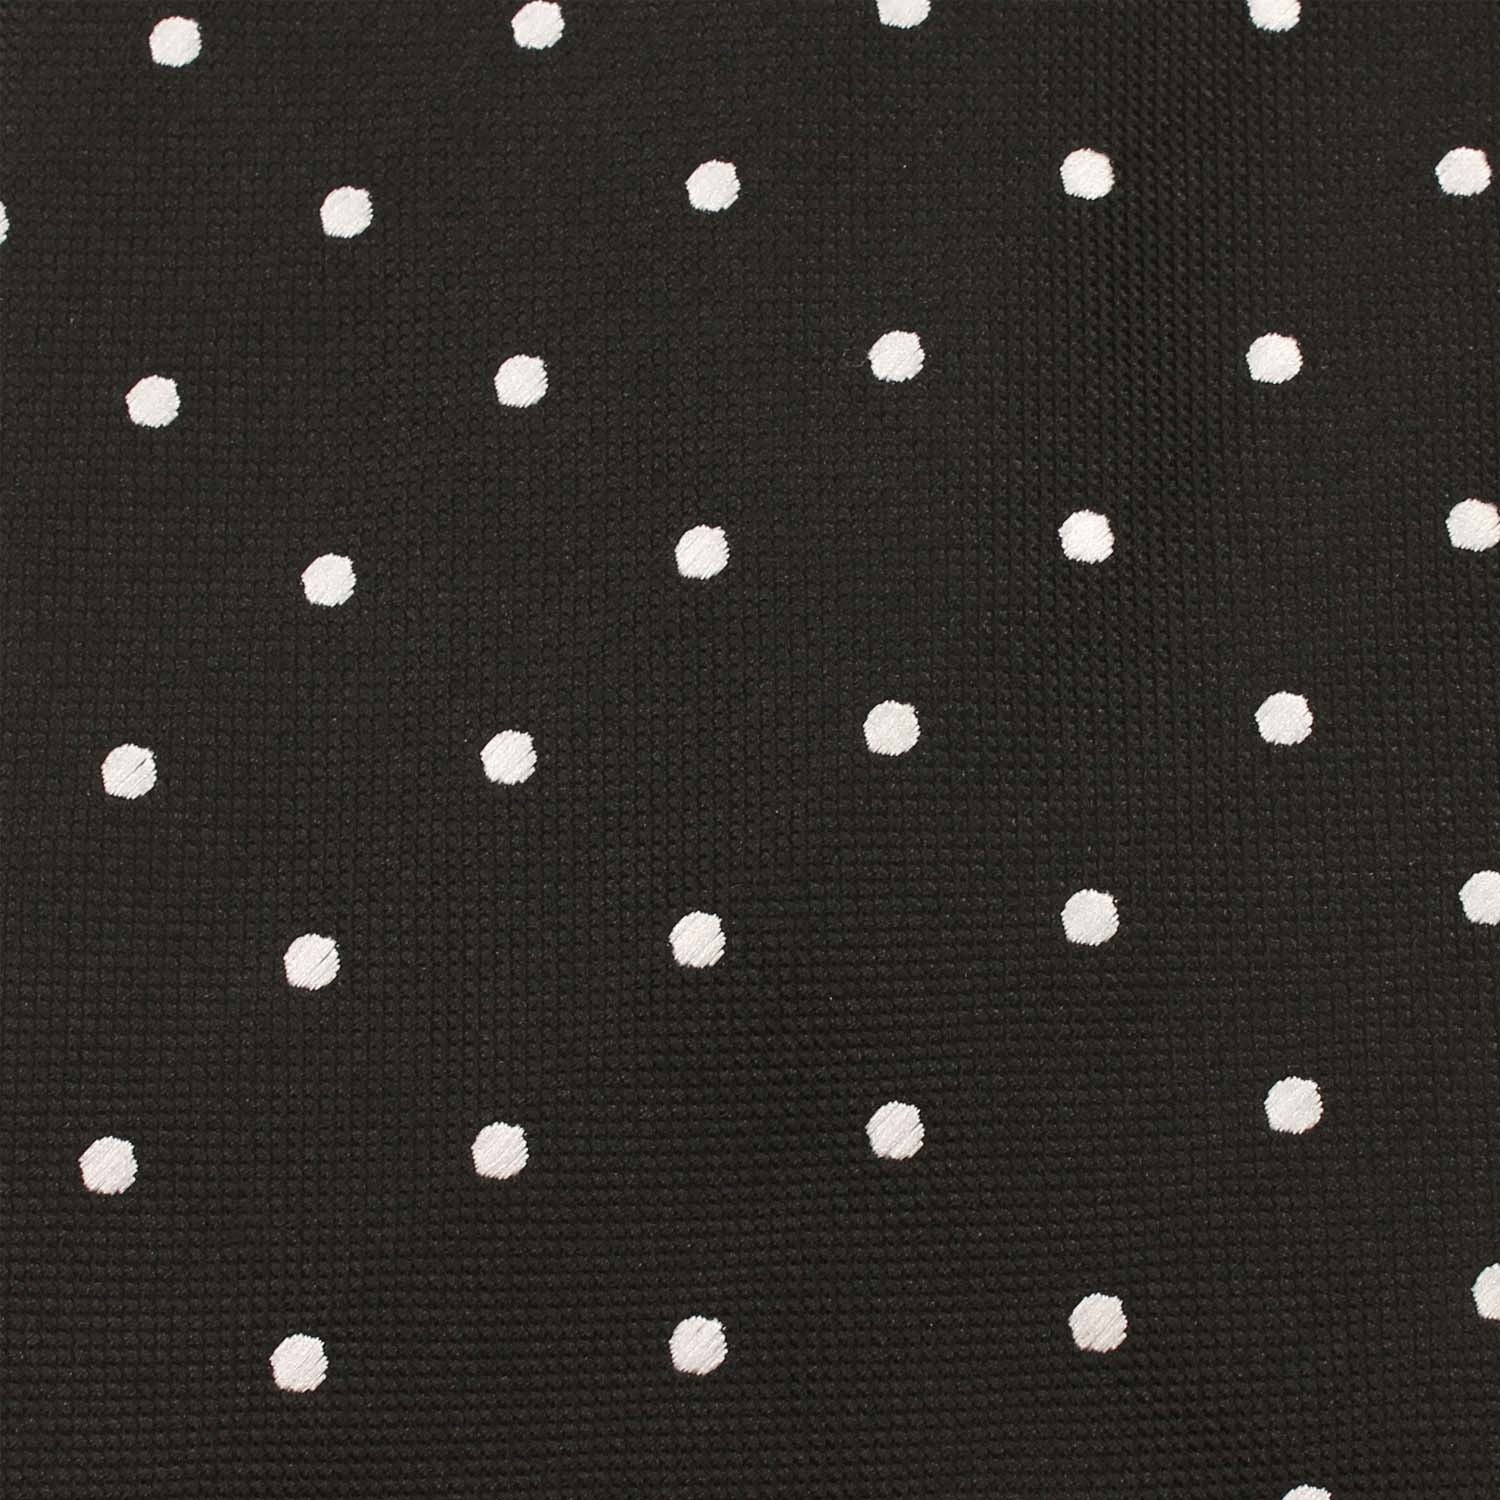 Coal Black with White Polka Dots Fabric Self Tie Diamond Tip Bow TieX327